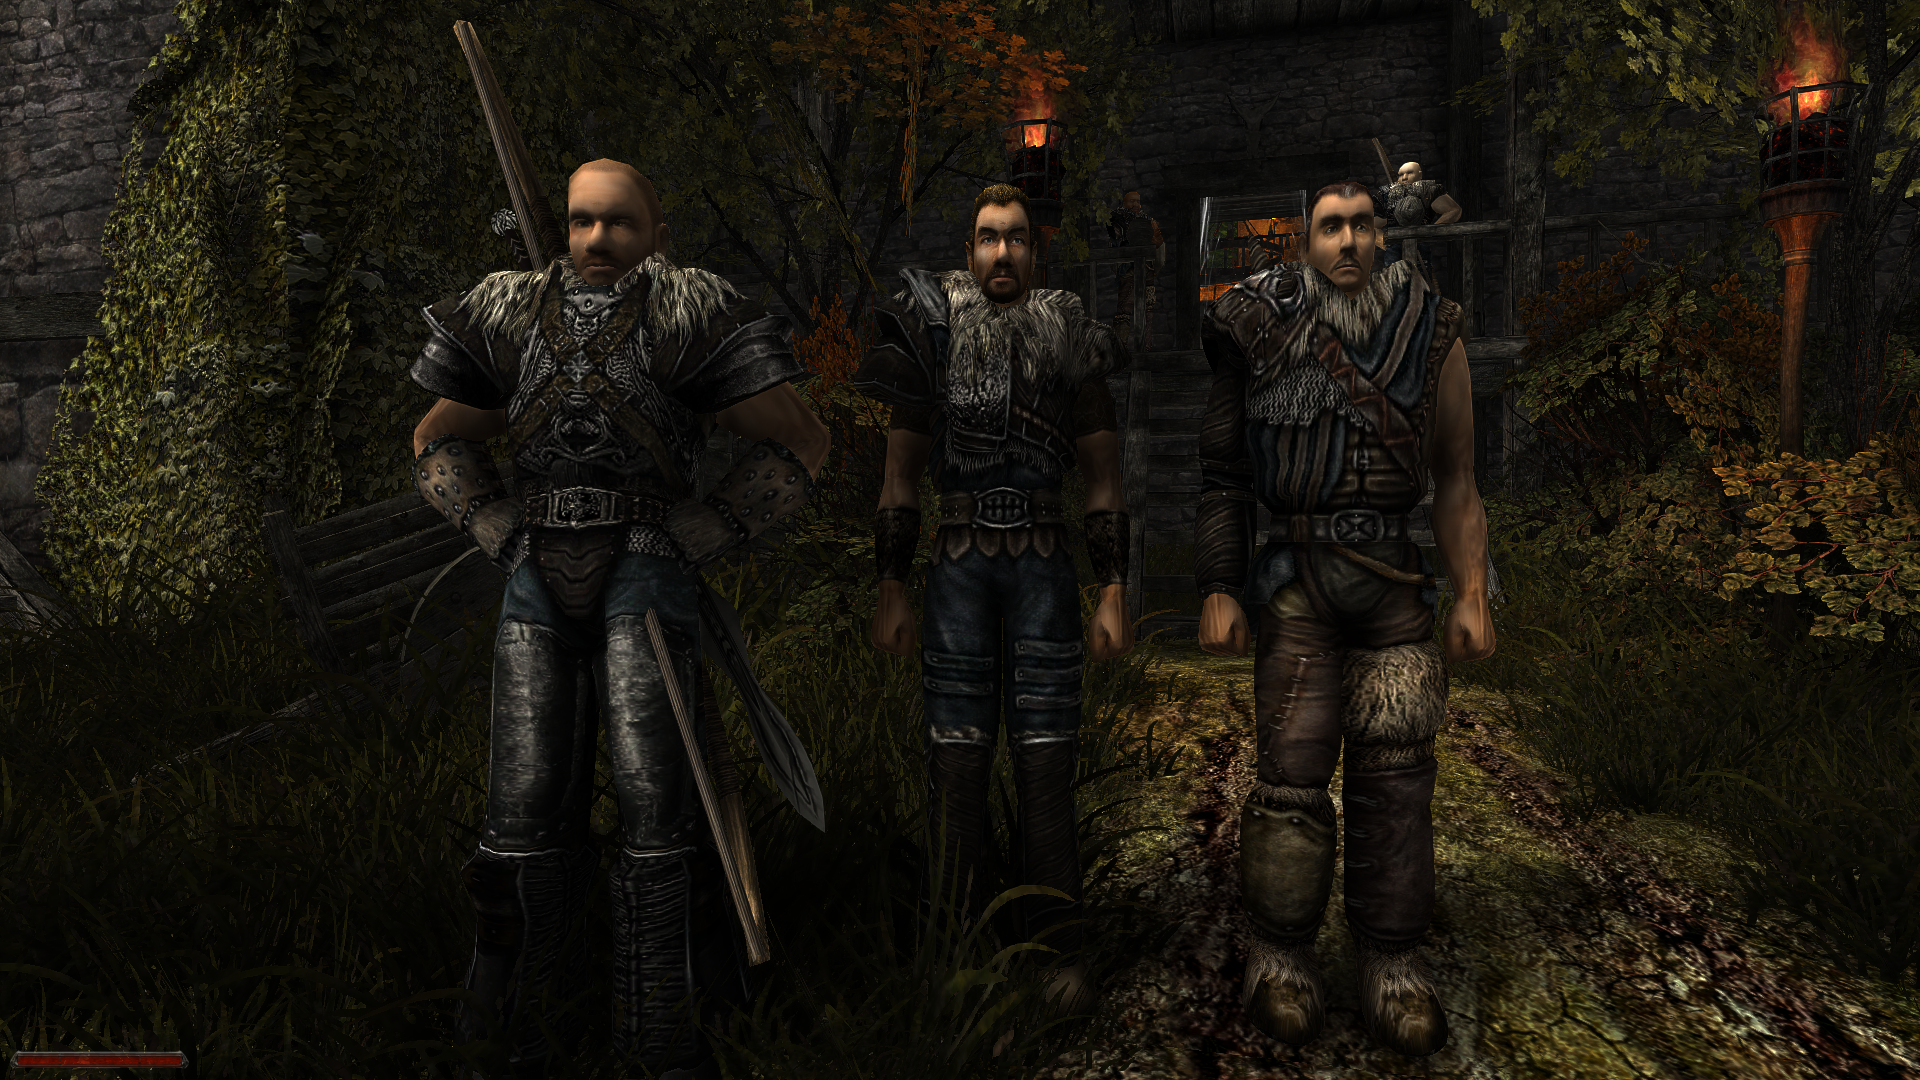 Mercenary Armors - Final image - Gothic 2 - Requiem mod for Gothic II ...